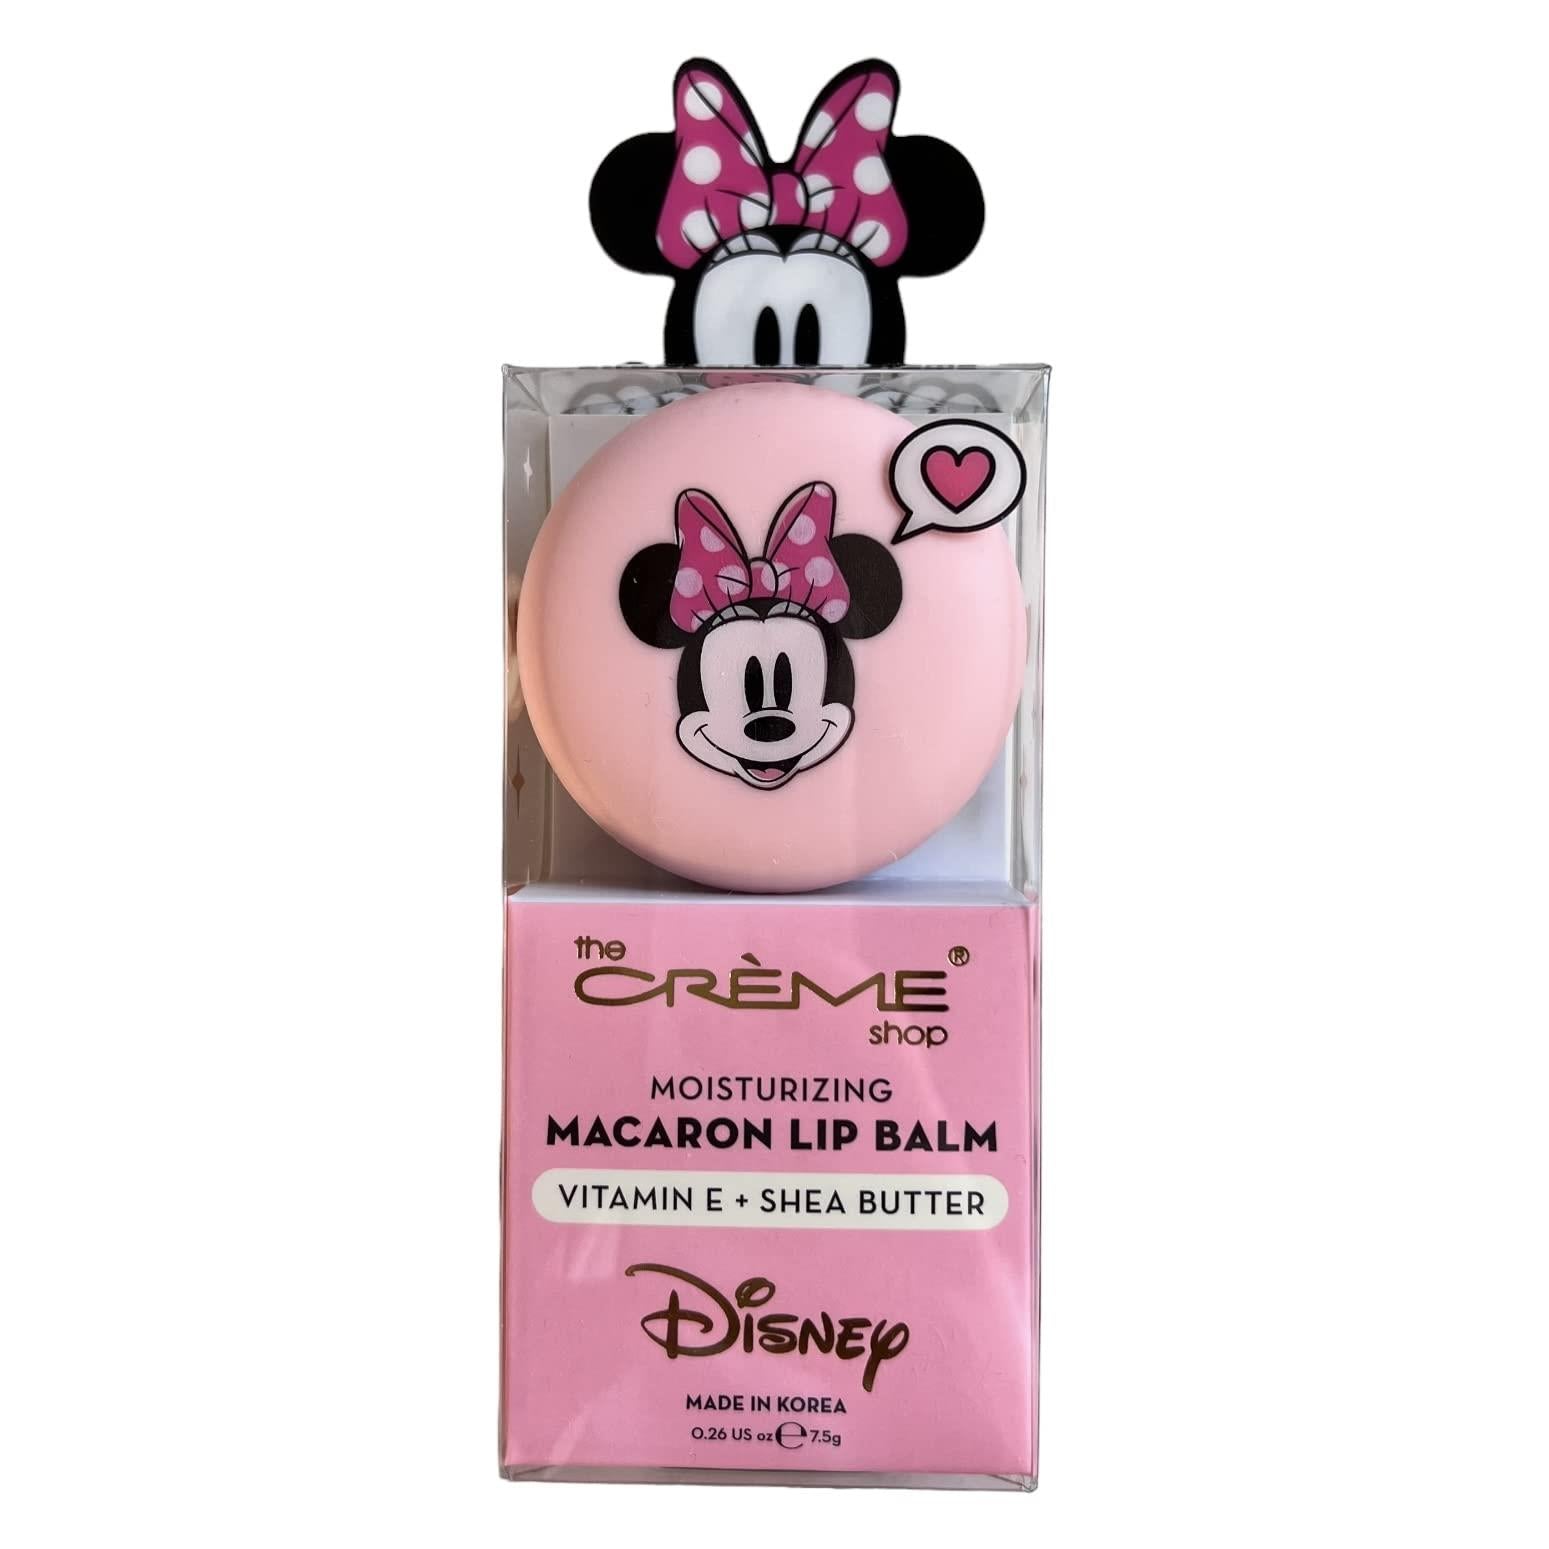 The Crème Shop x Disney Macaron Lip Balm Minnie Mouse Strawberries and Crème Pink Korean Scented Pocket Portable Vitamin E Shea Butter